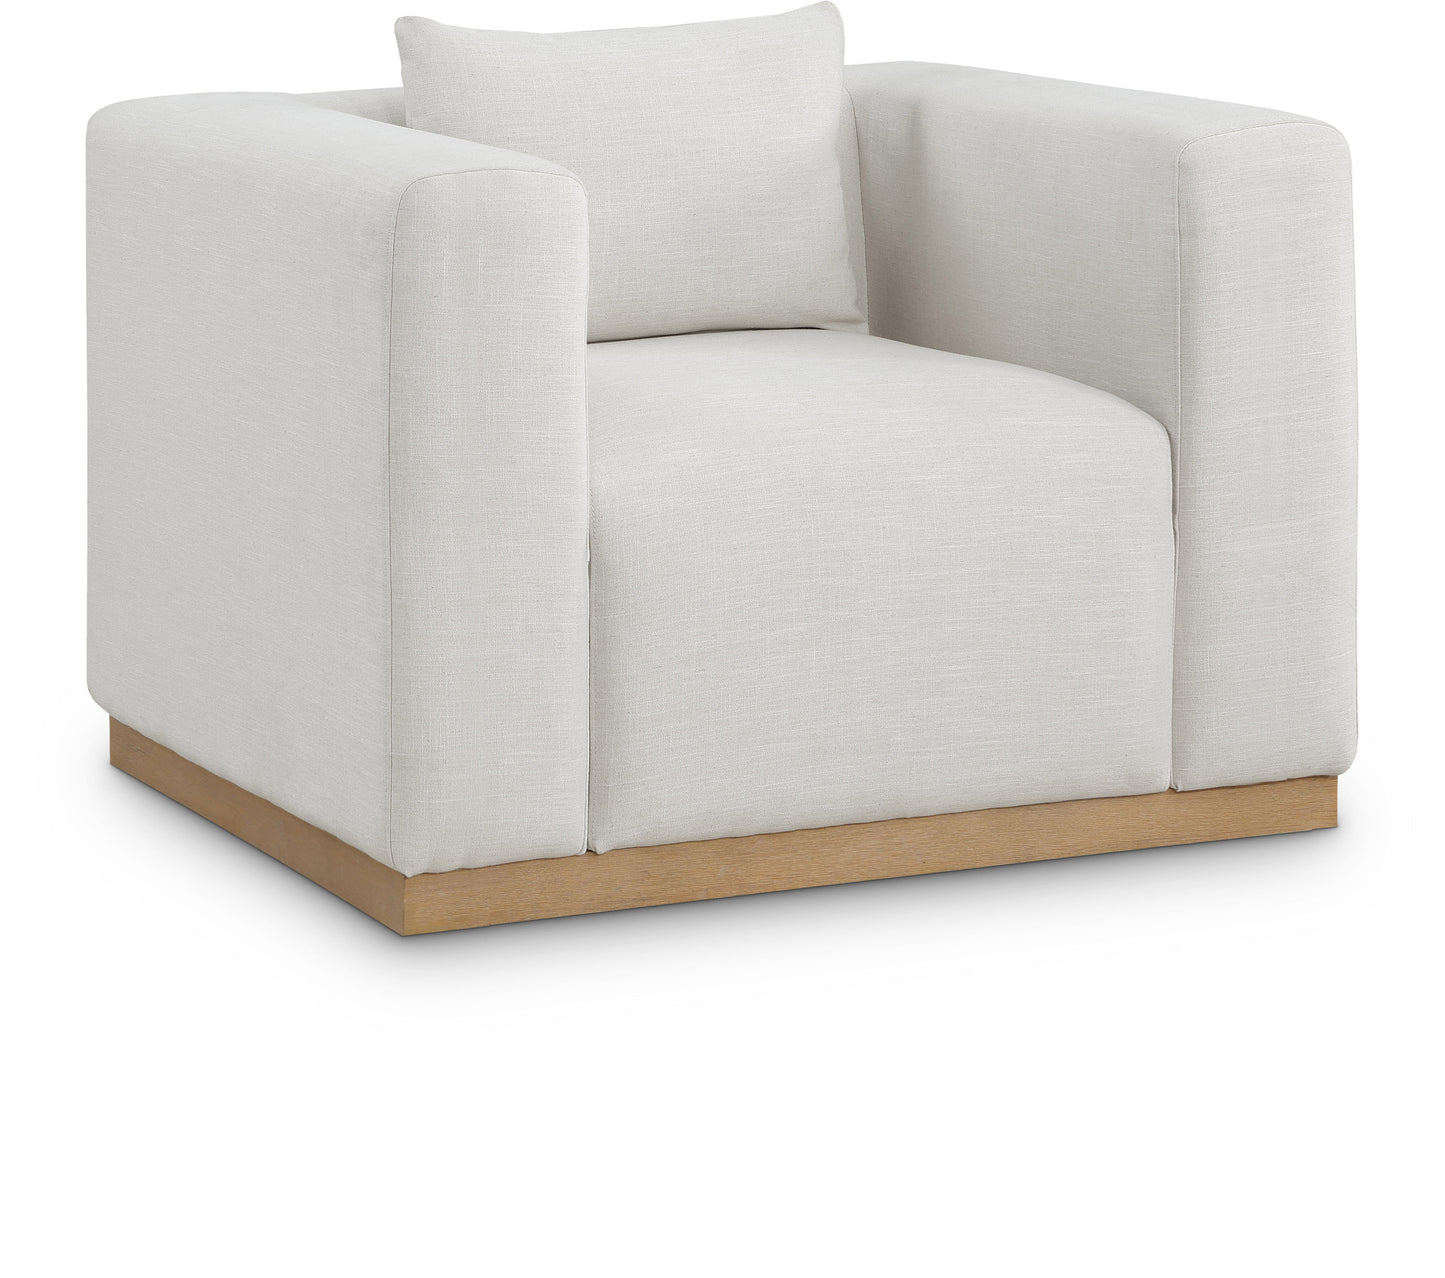 Alfie Linen Textured Fabic Living Room Chair SKU: 642Cream-C